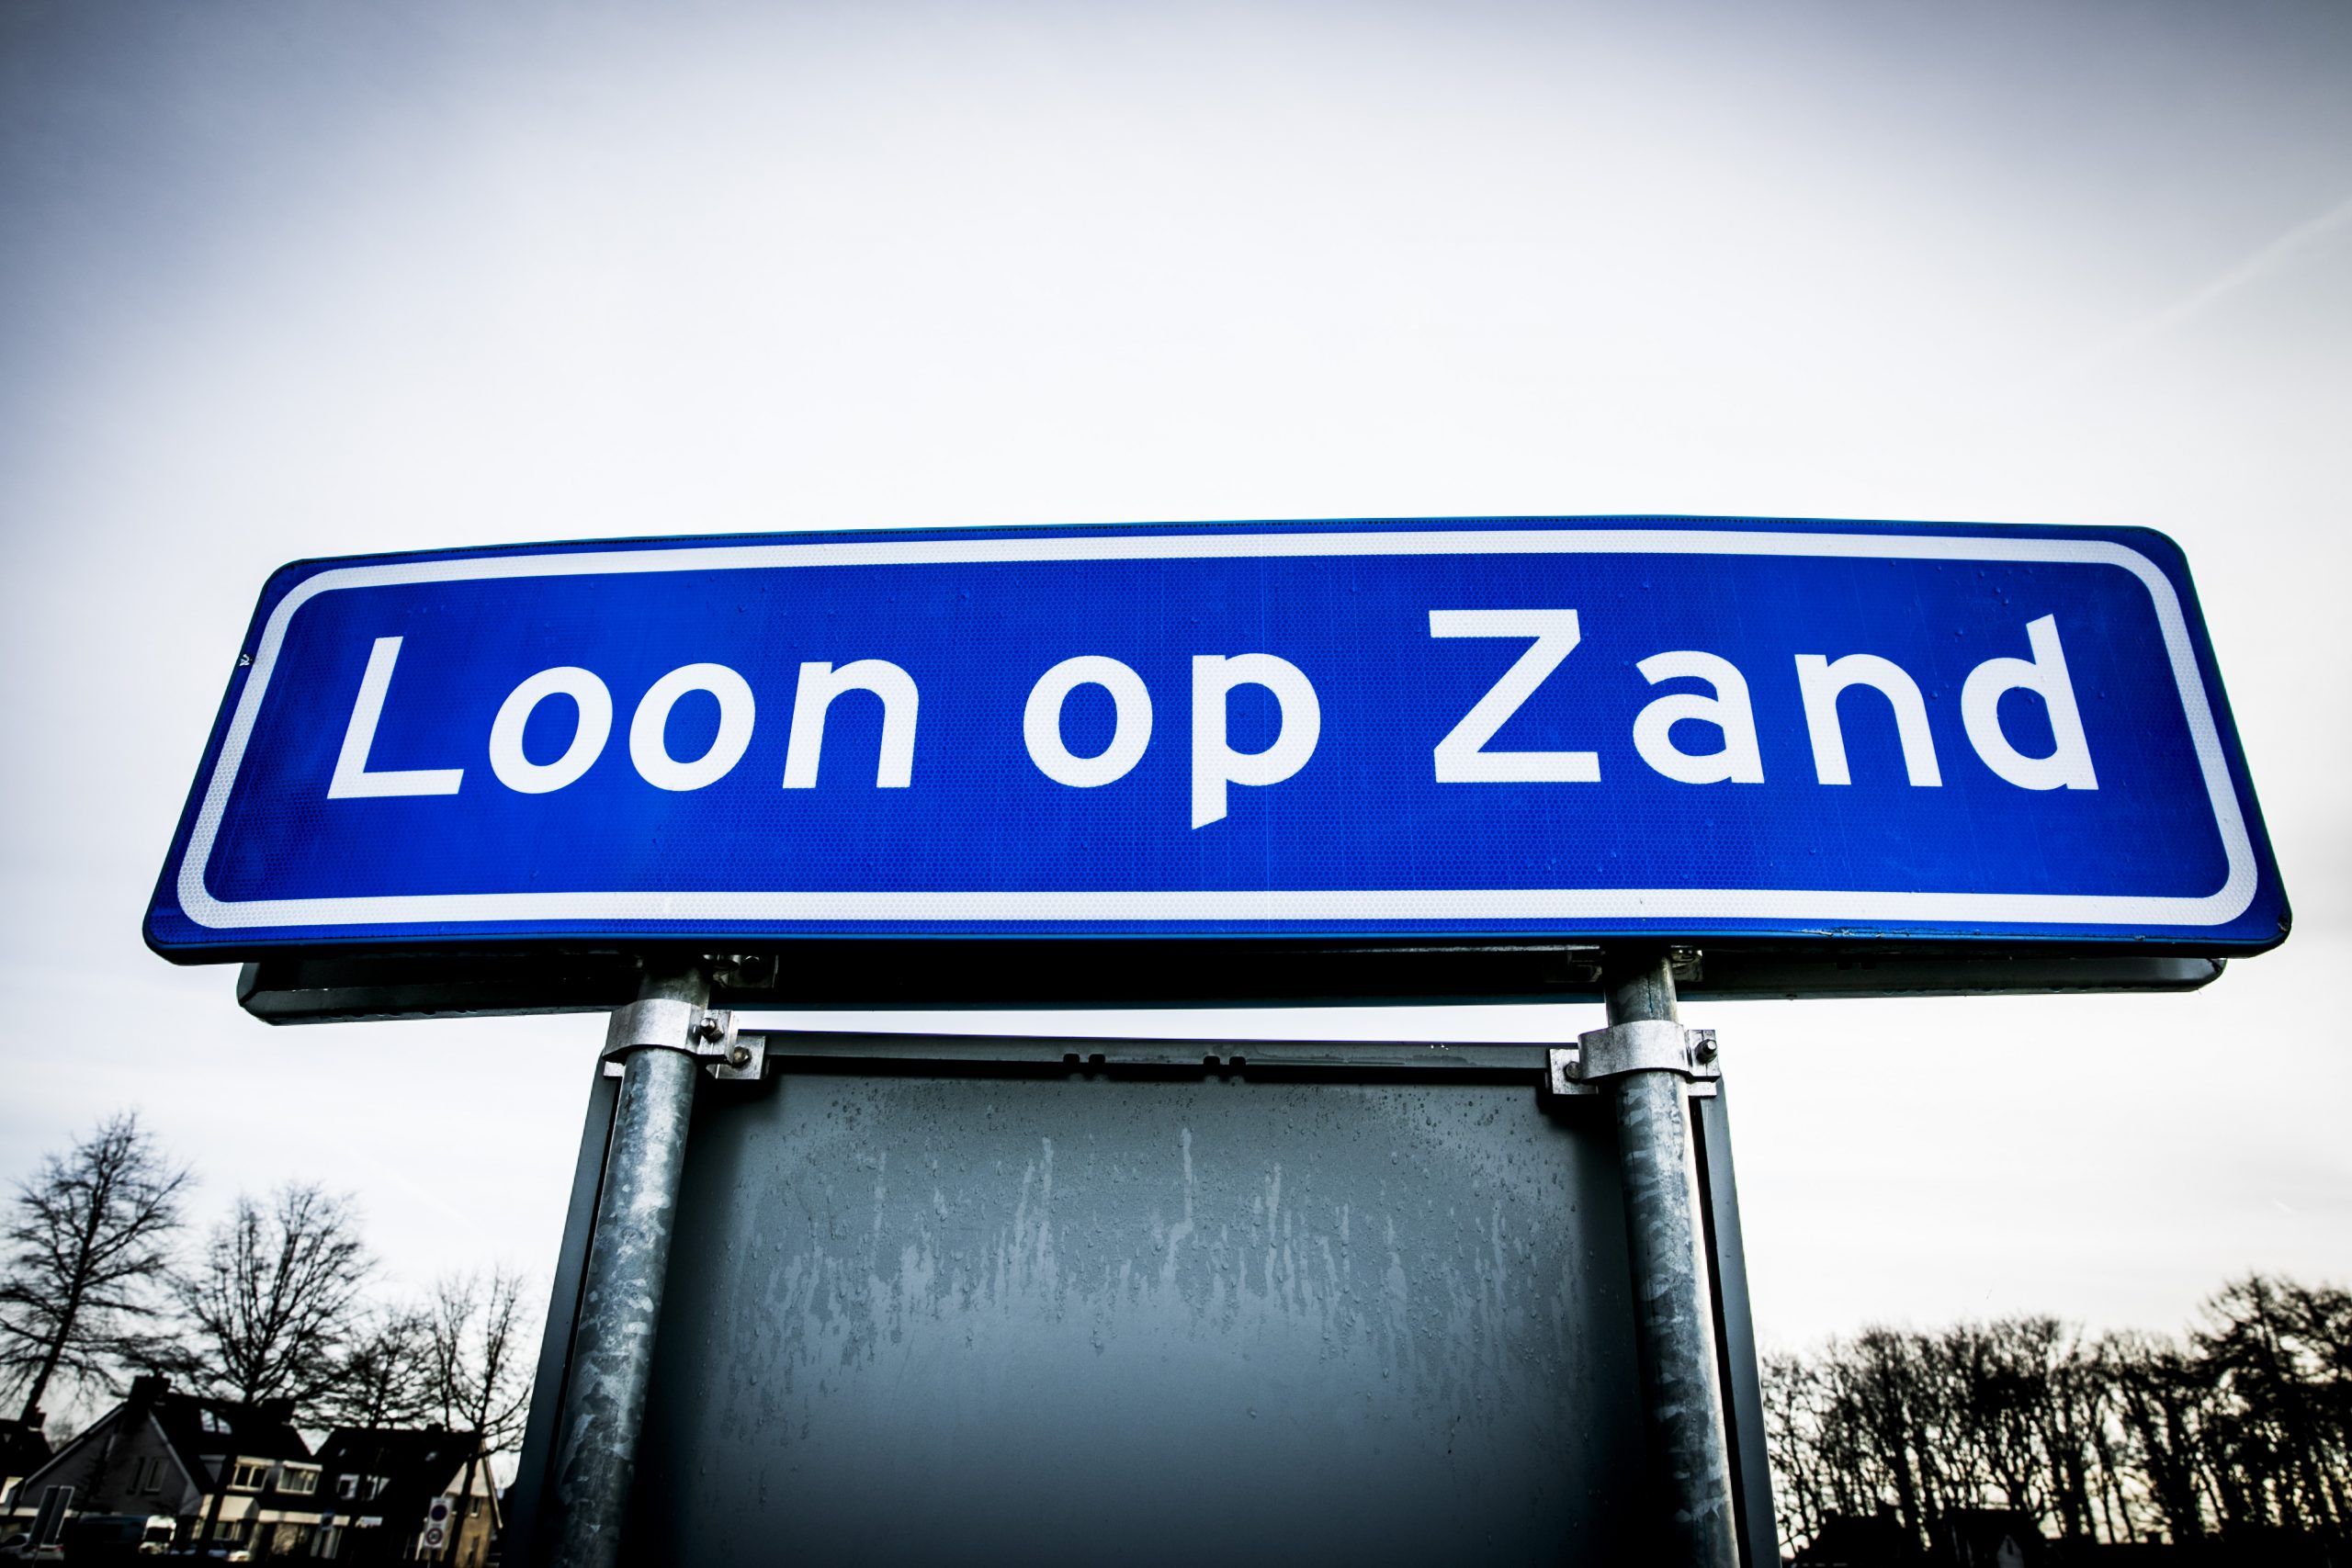 Loon Op Zand